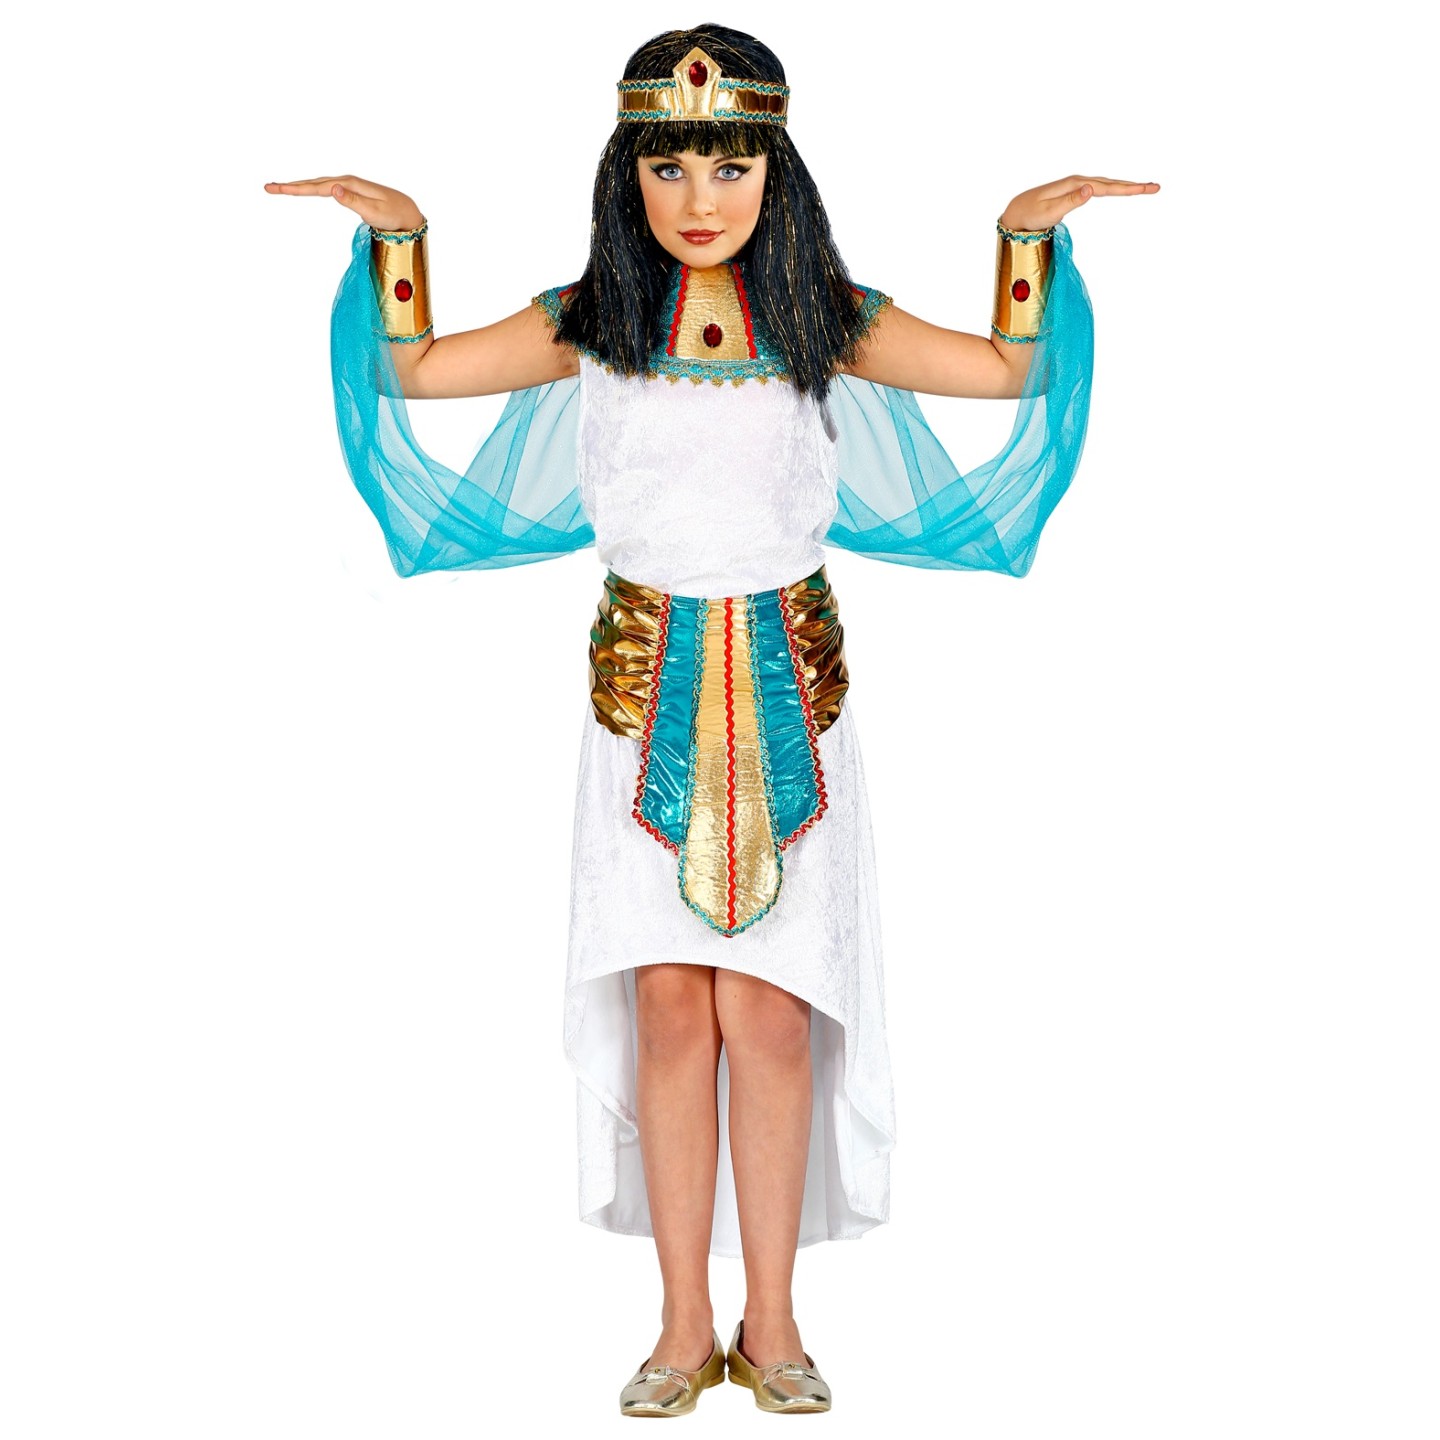 egyptische koningin jurkje cleopatra kostuum kind